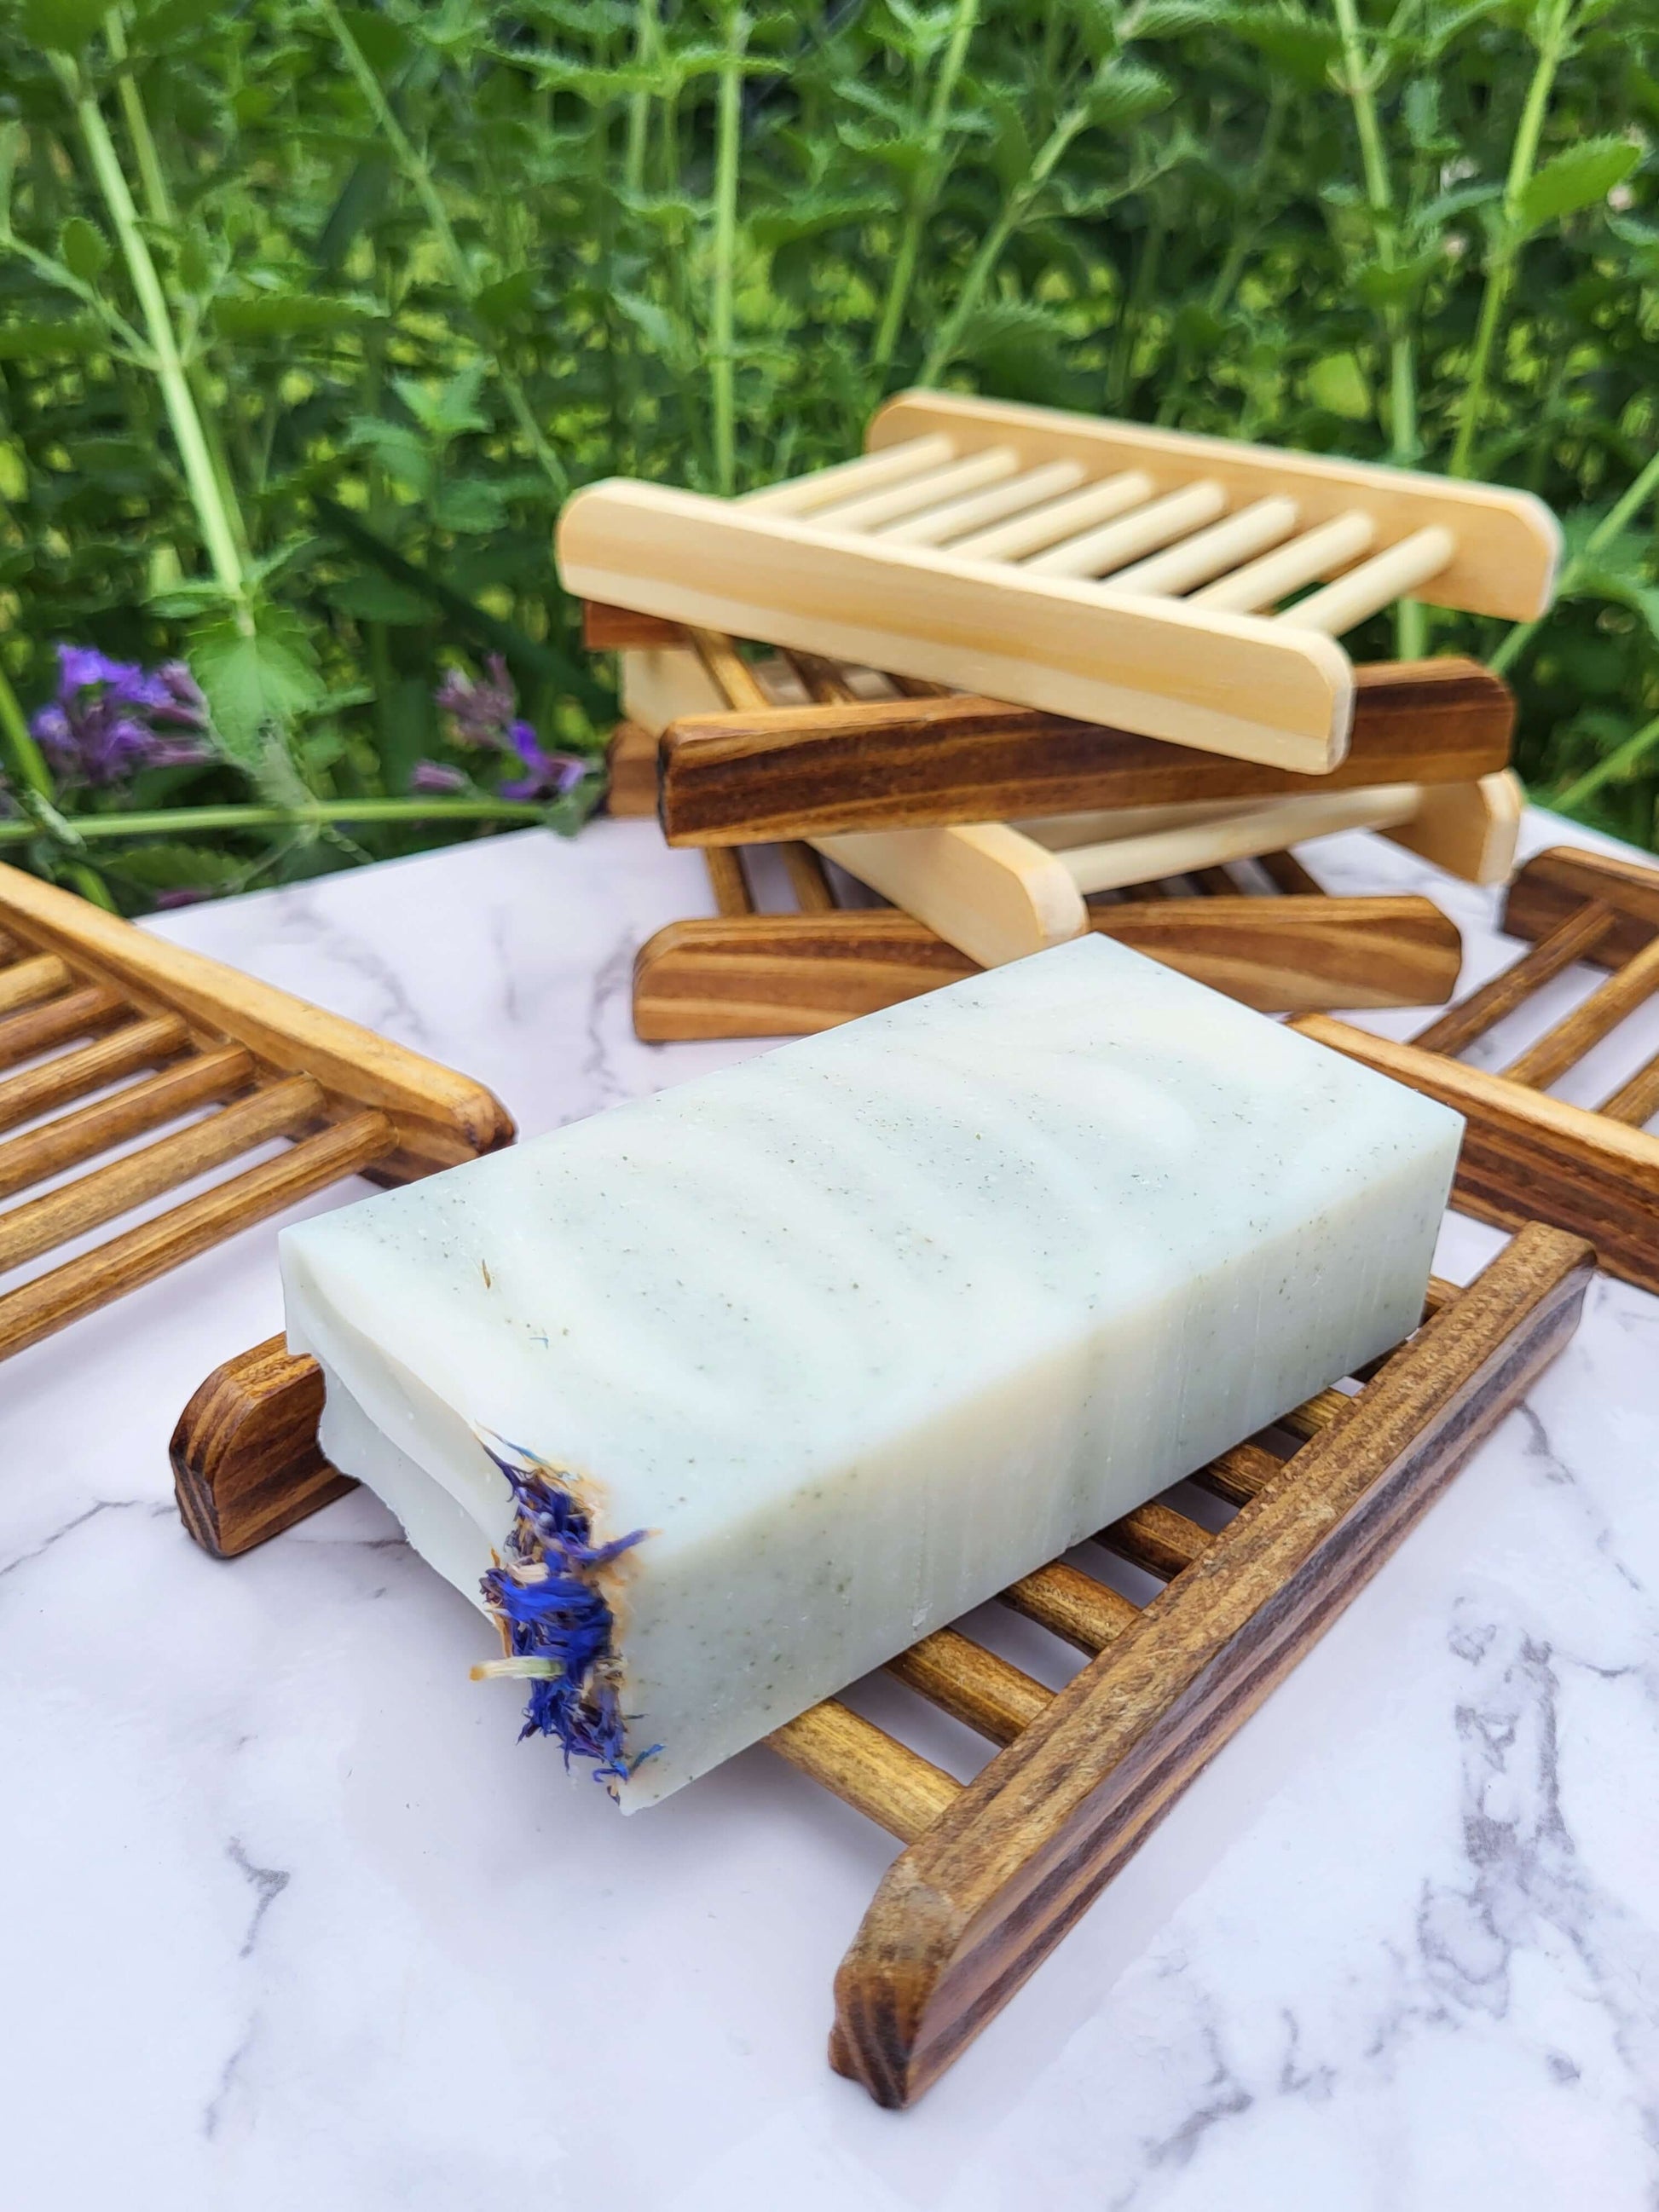 Old fashioned lard soap on natural bamboo soap dish